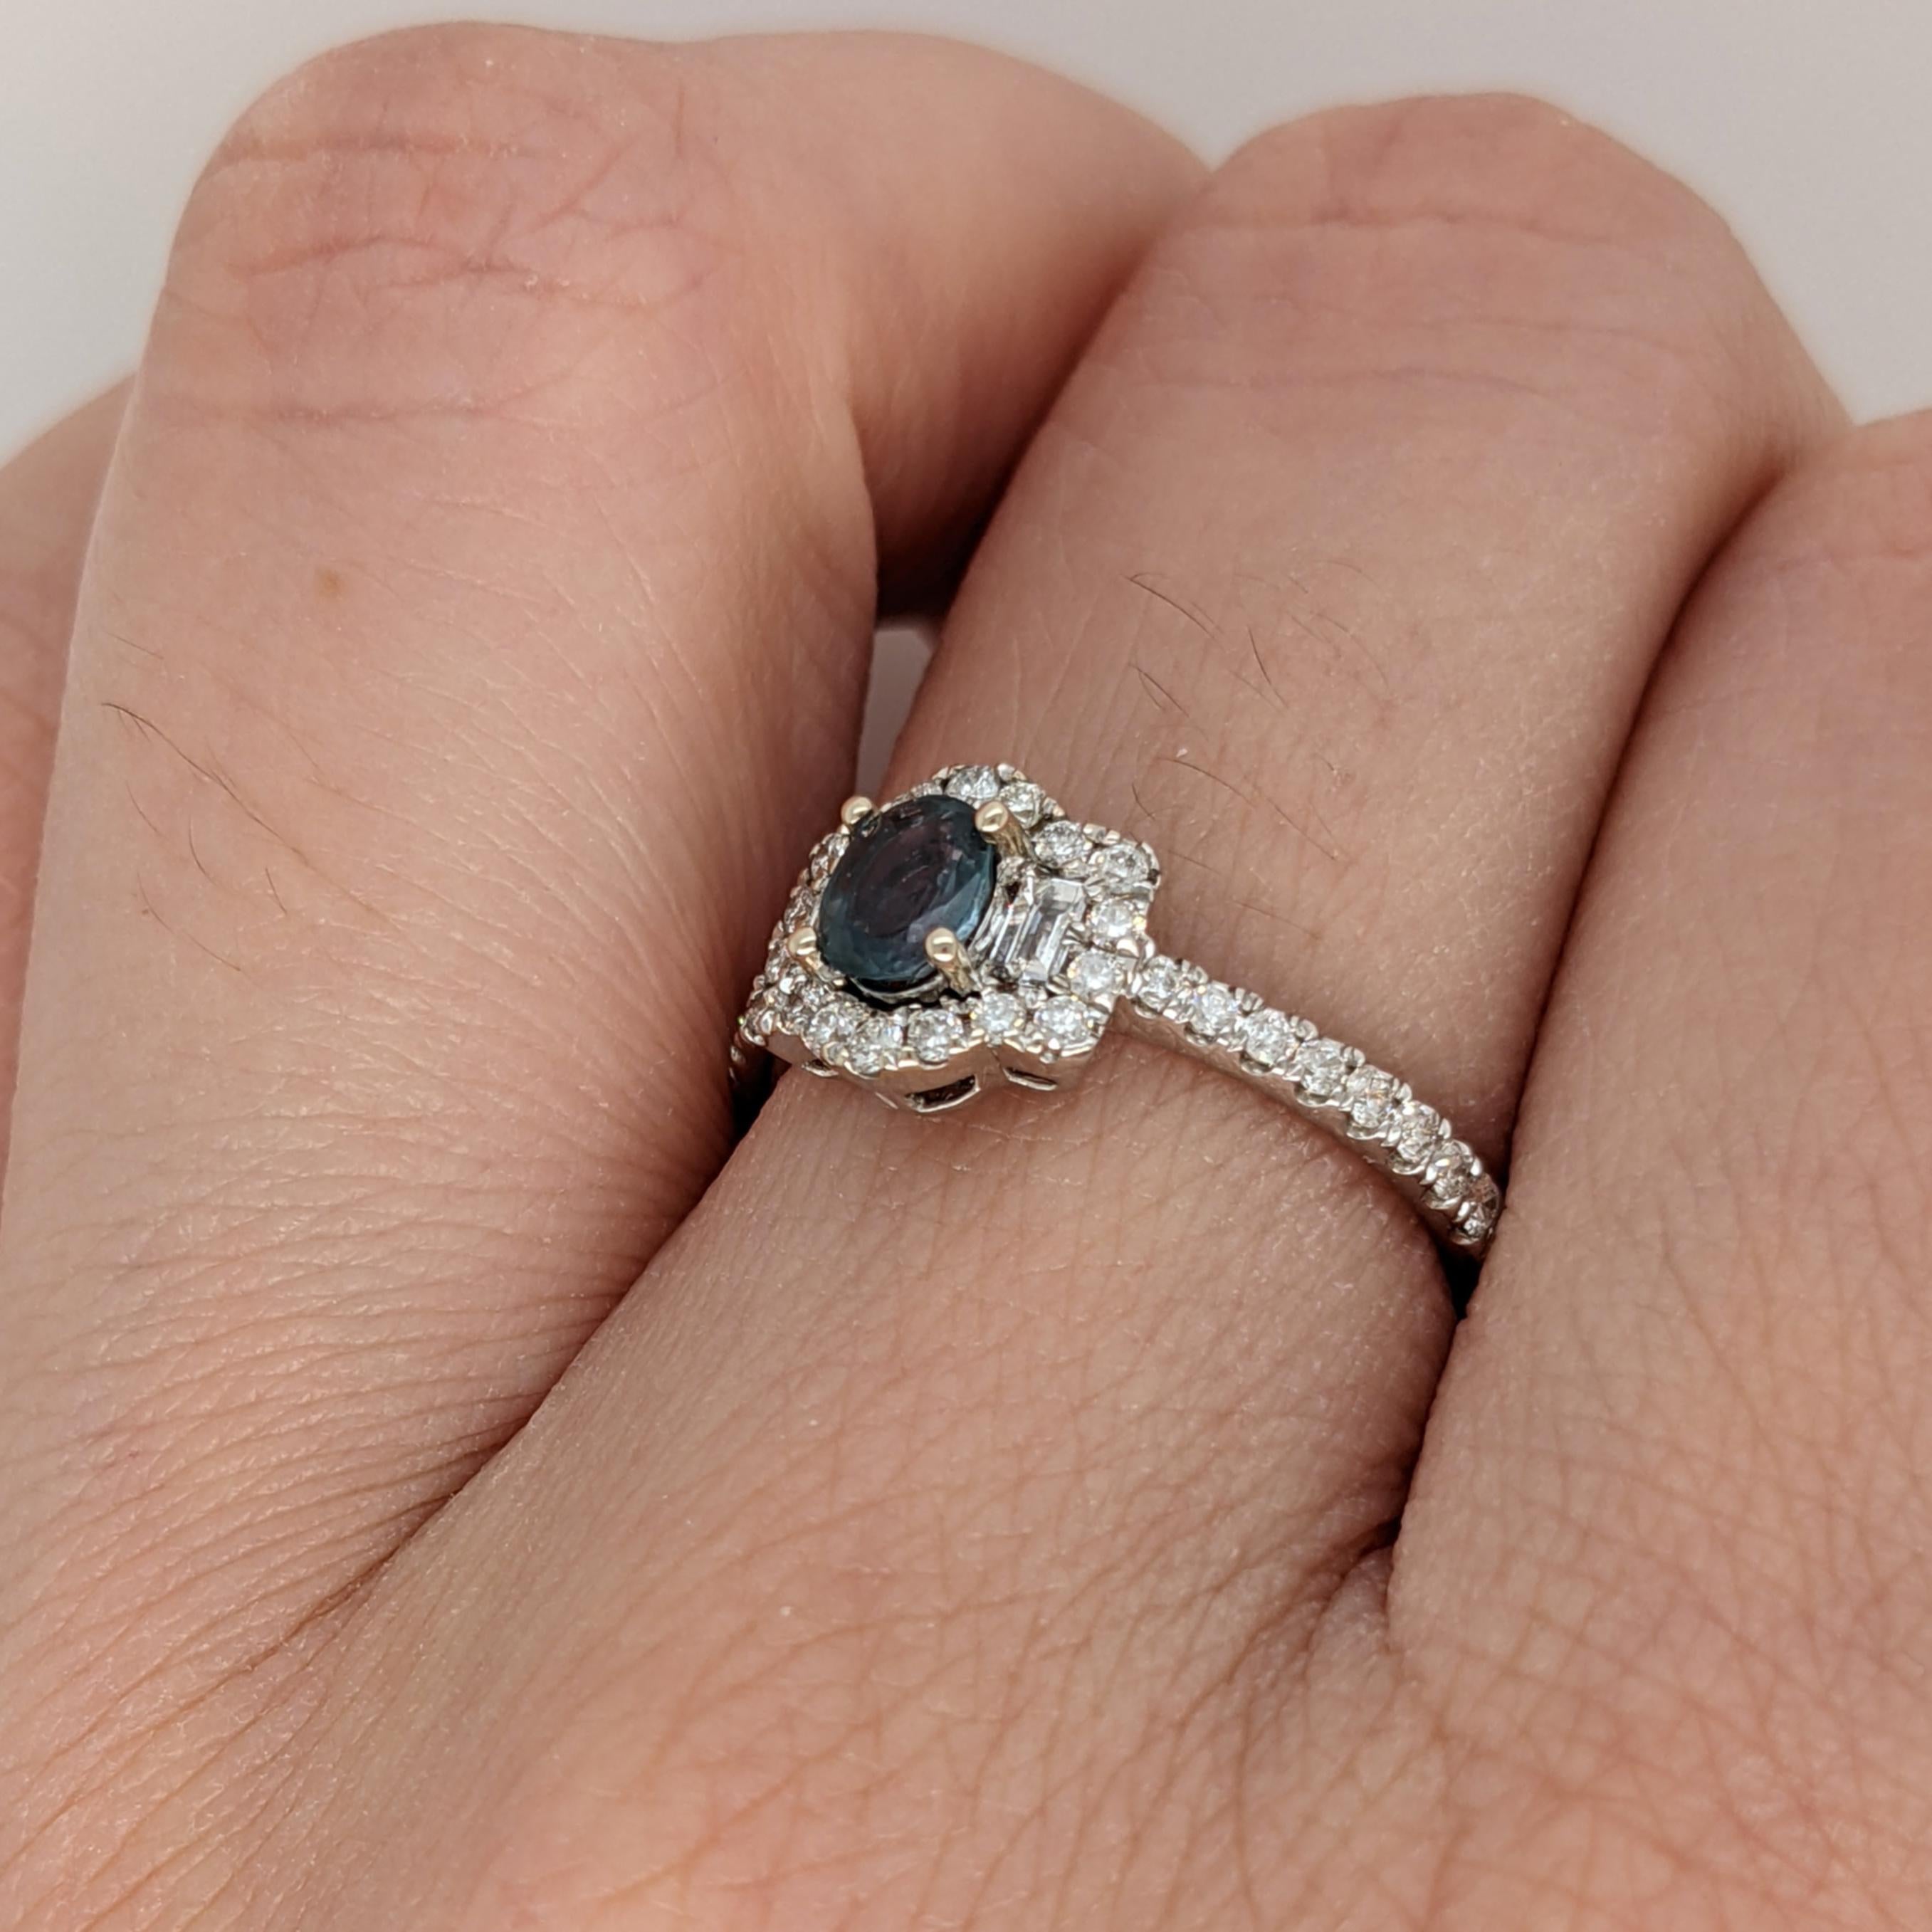 Art Deco Unique Natural Color Changing Alexandrite Ring with Baguette Diamond Accents